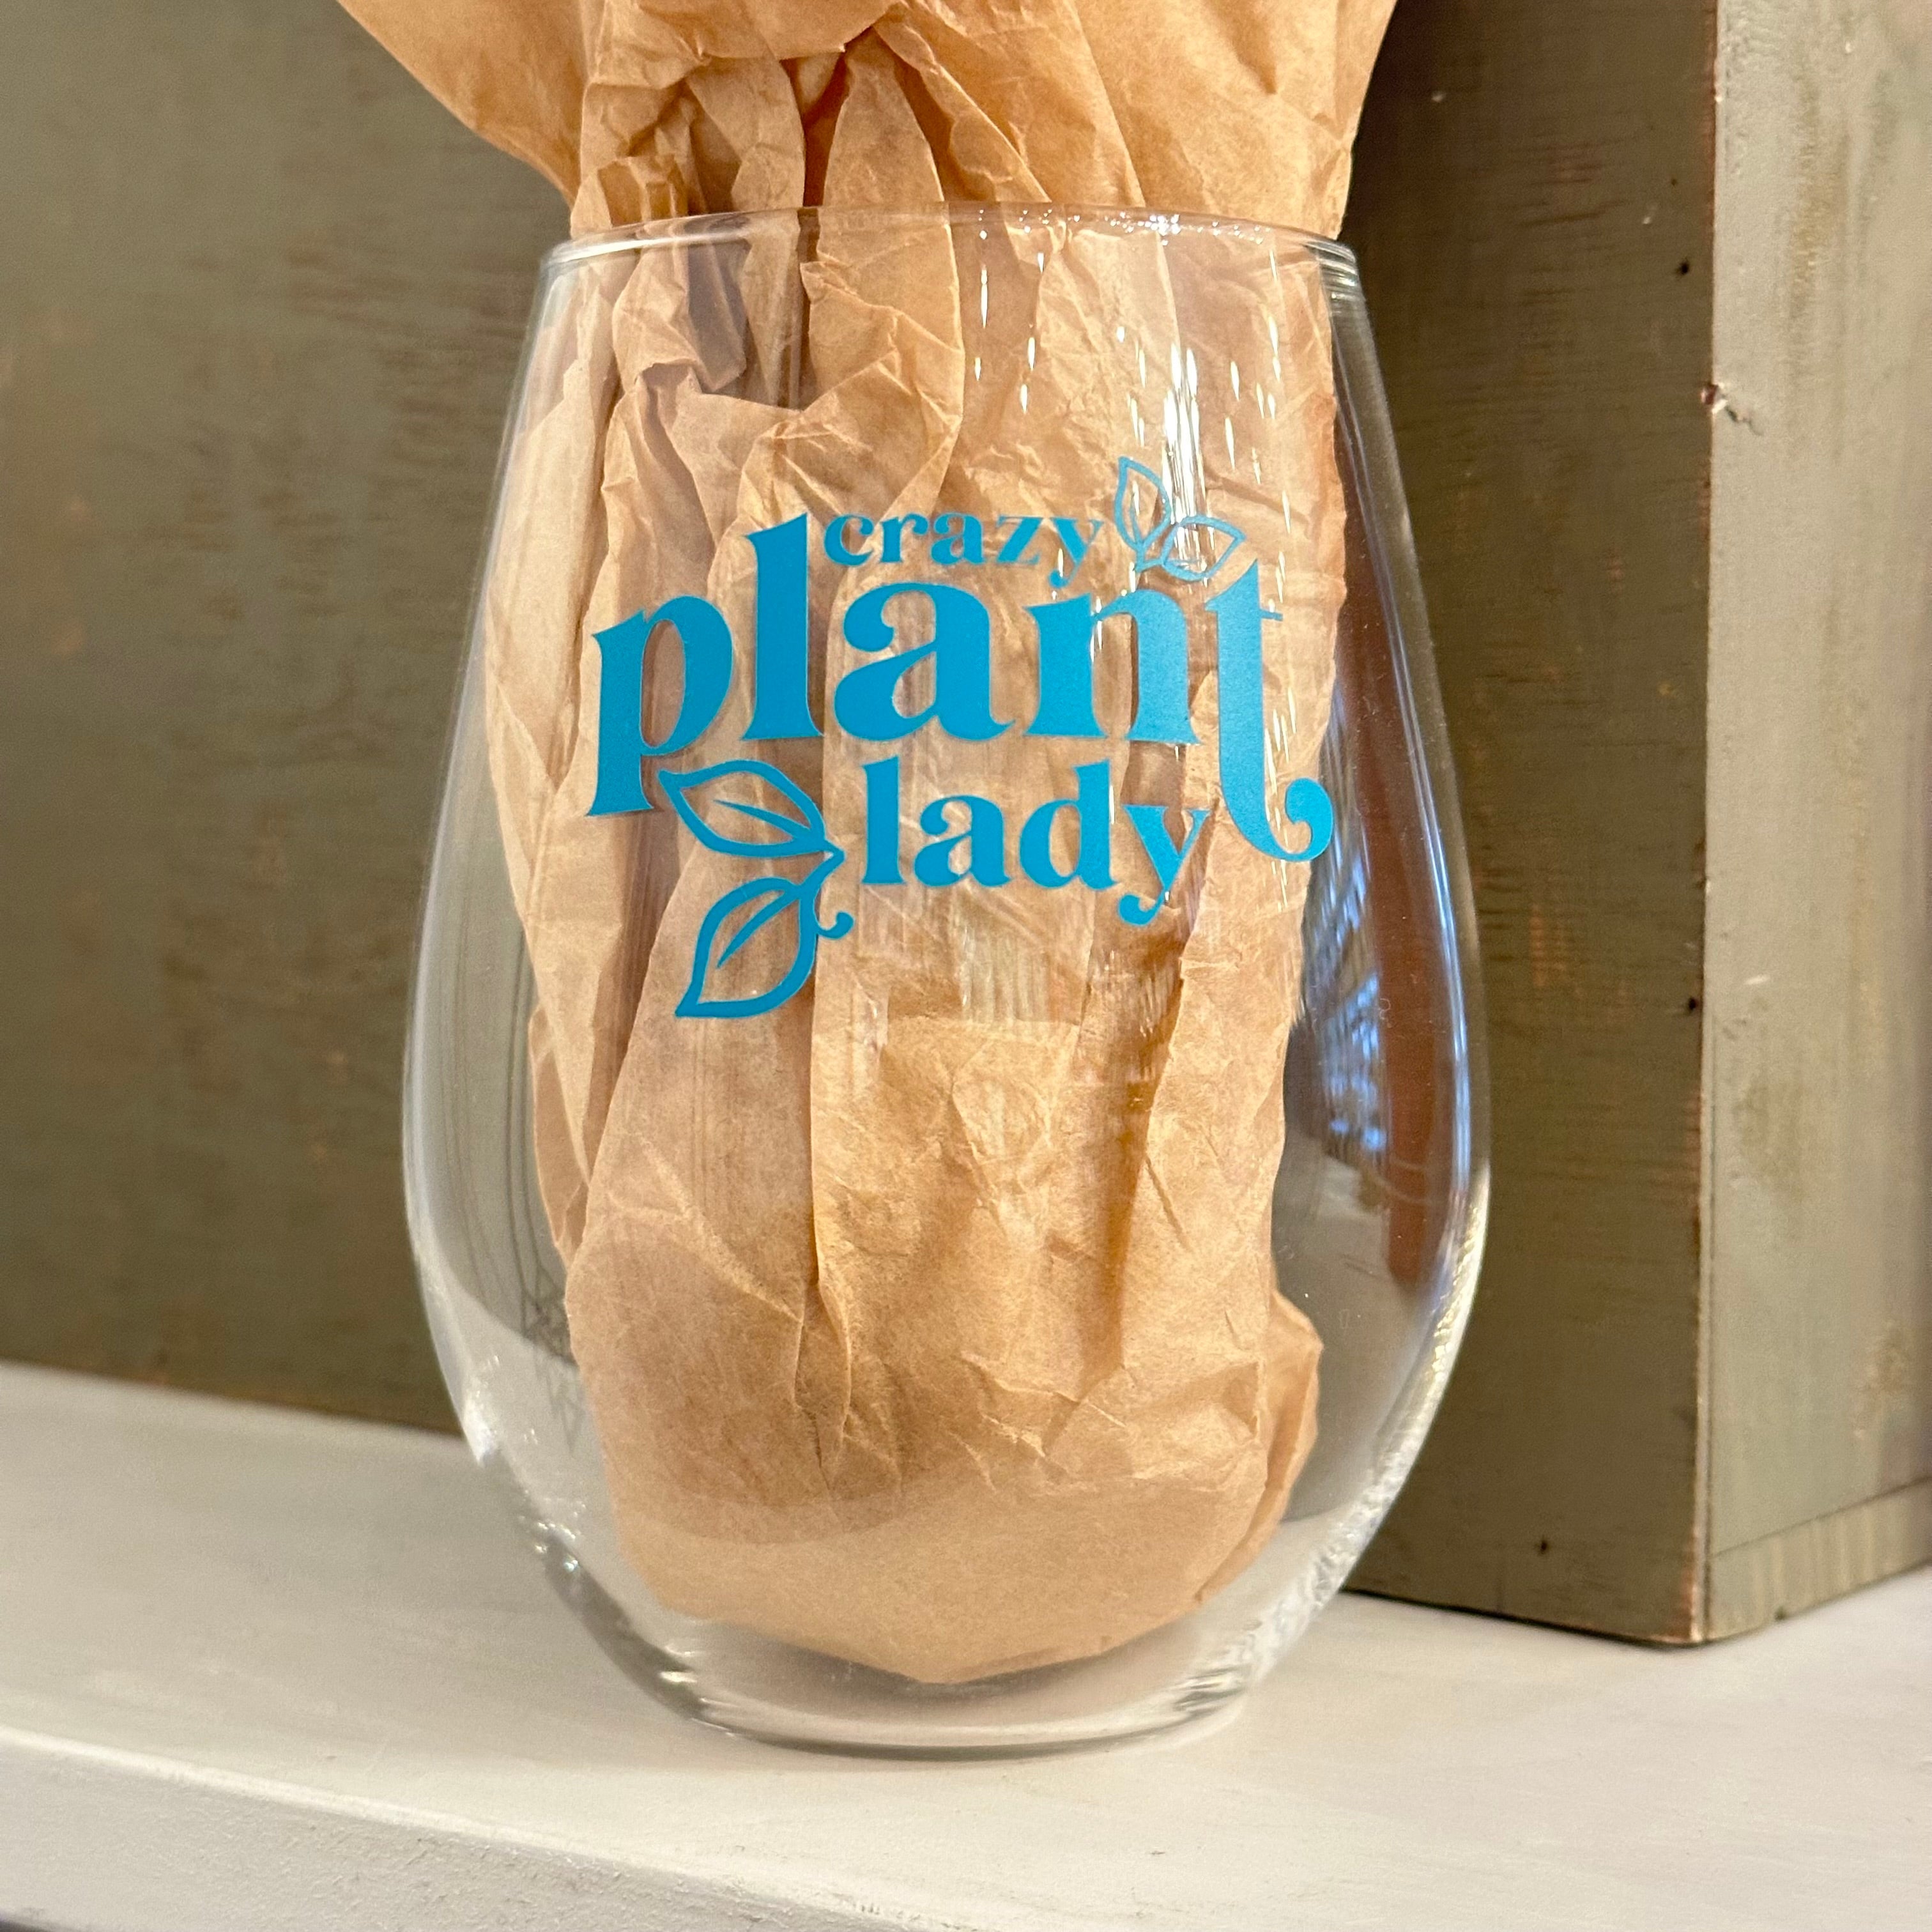 Crazy Plant Lady - Wine Glass | Raine Designs